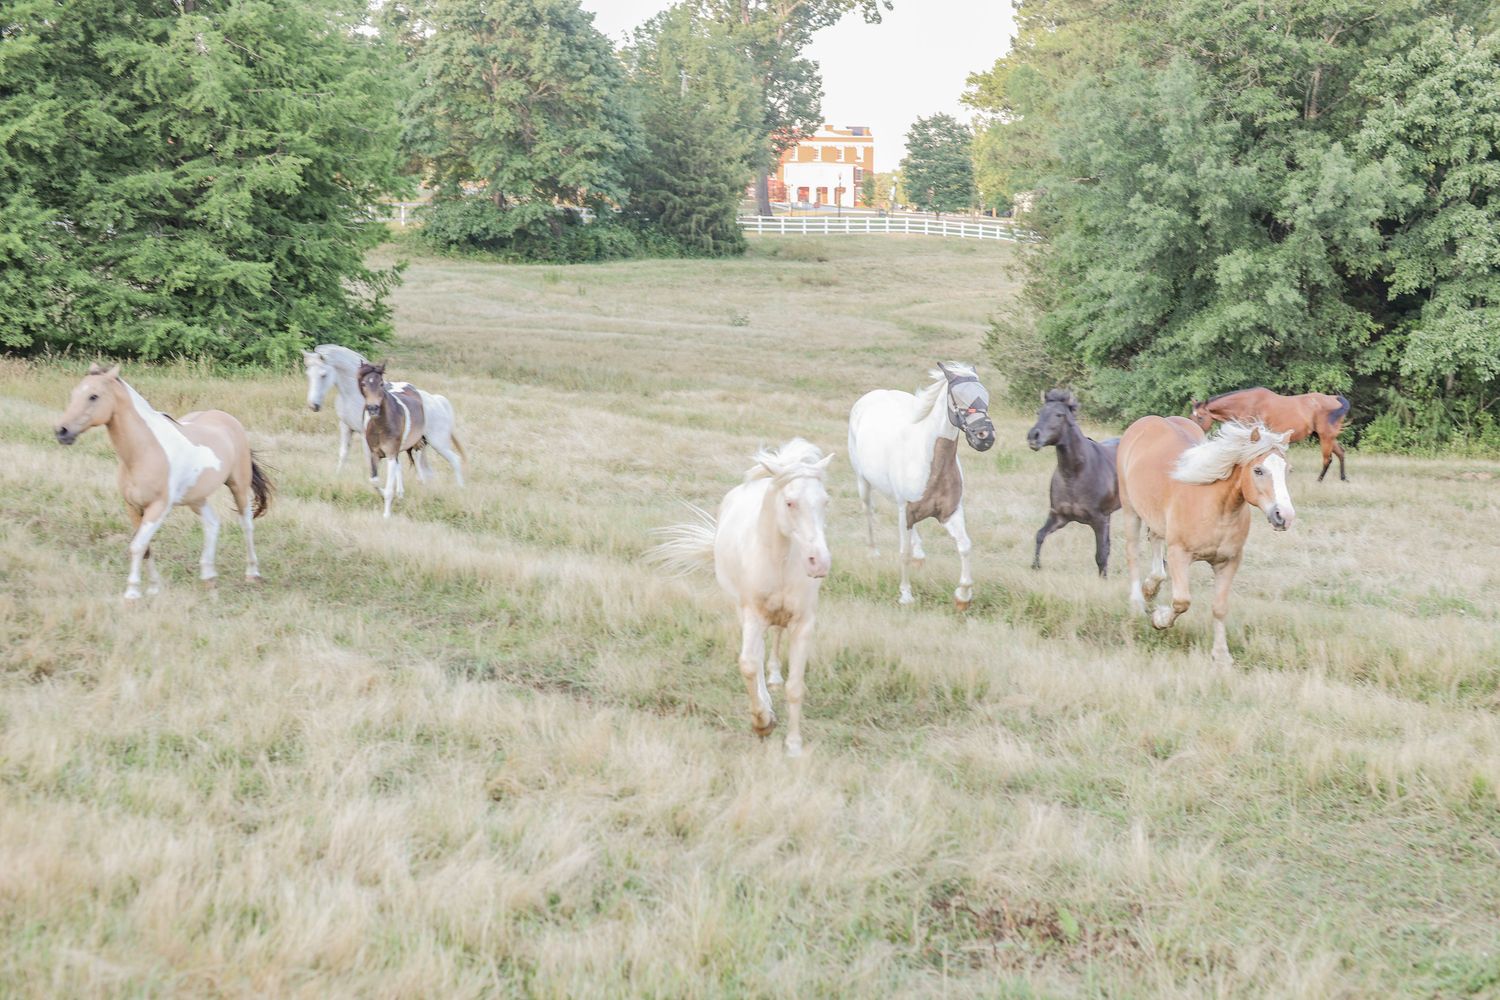 Gallery Photo of Horses running